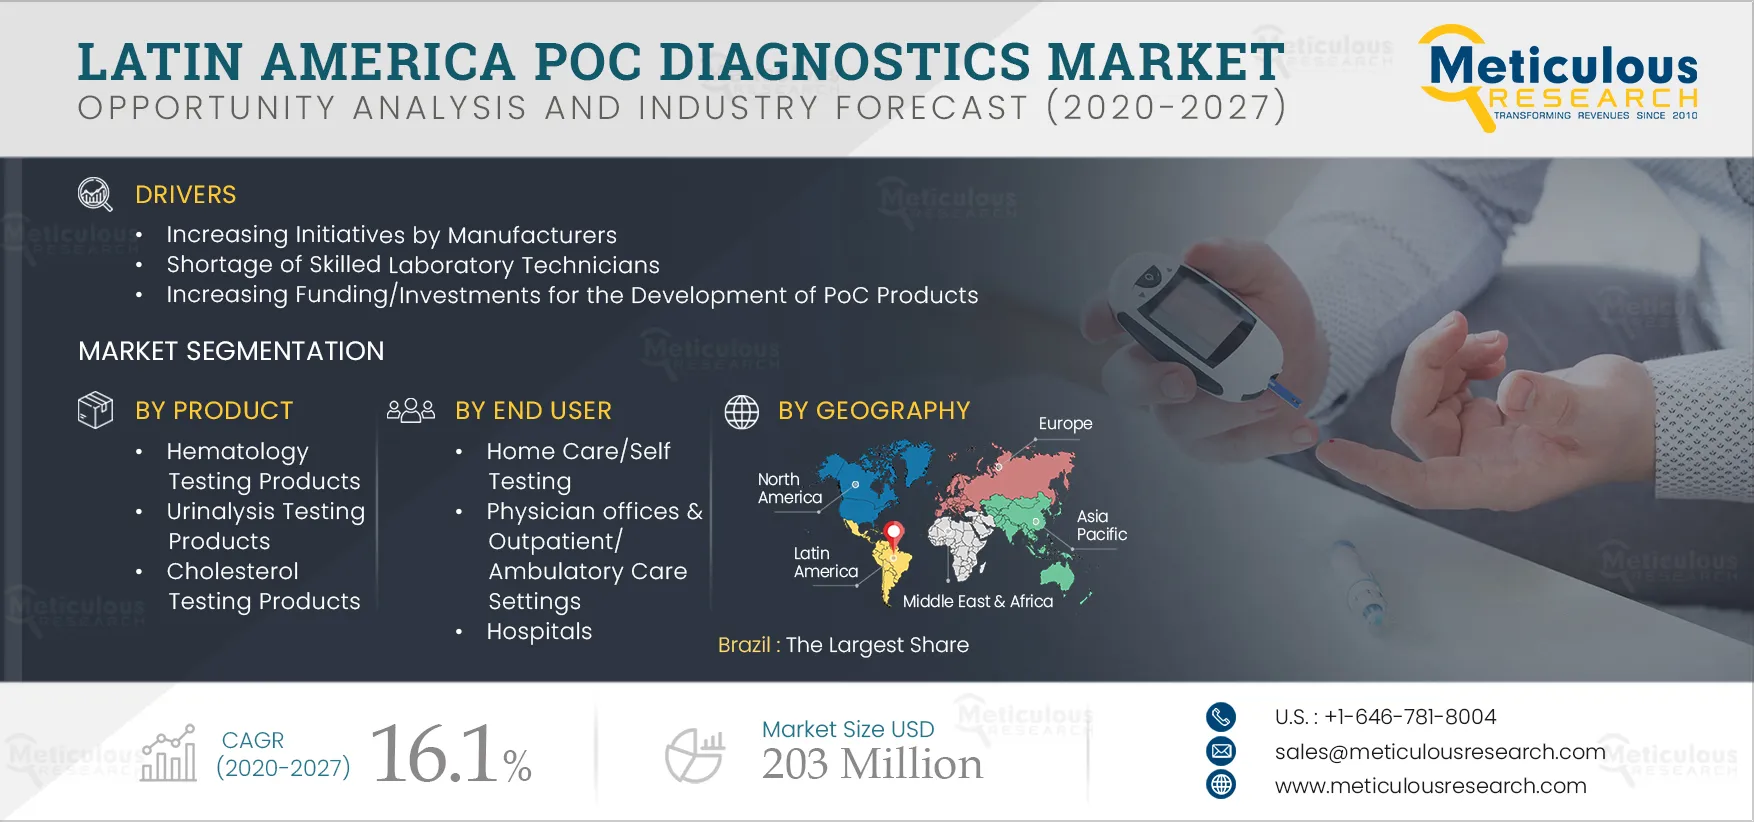 Latin America PoC Diagnostics Market